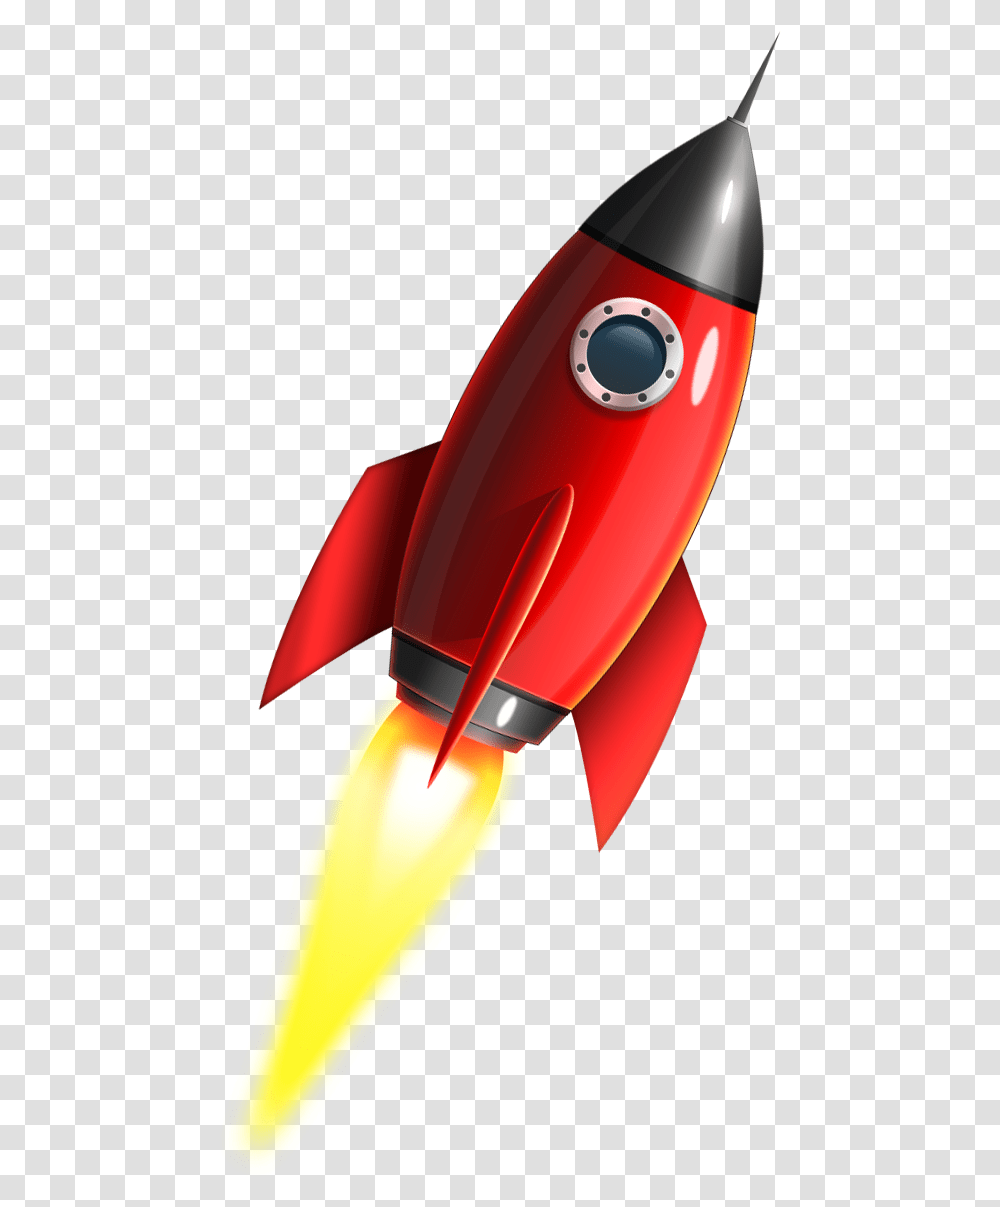 Rockets Free Download Rocket, Launch, Vehicle, Transportation, Appliance Transparent Png